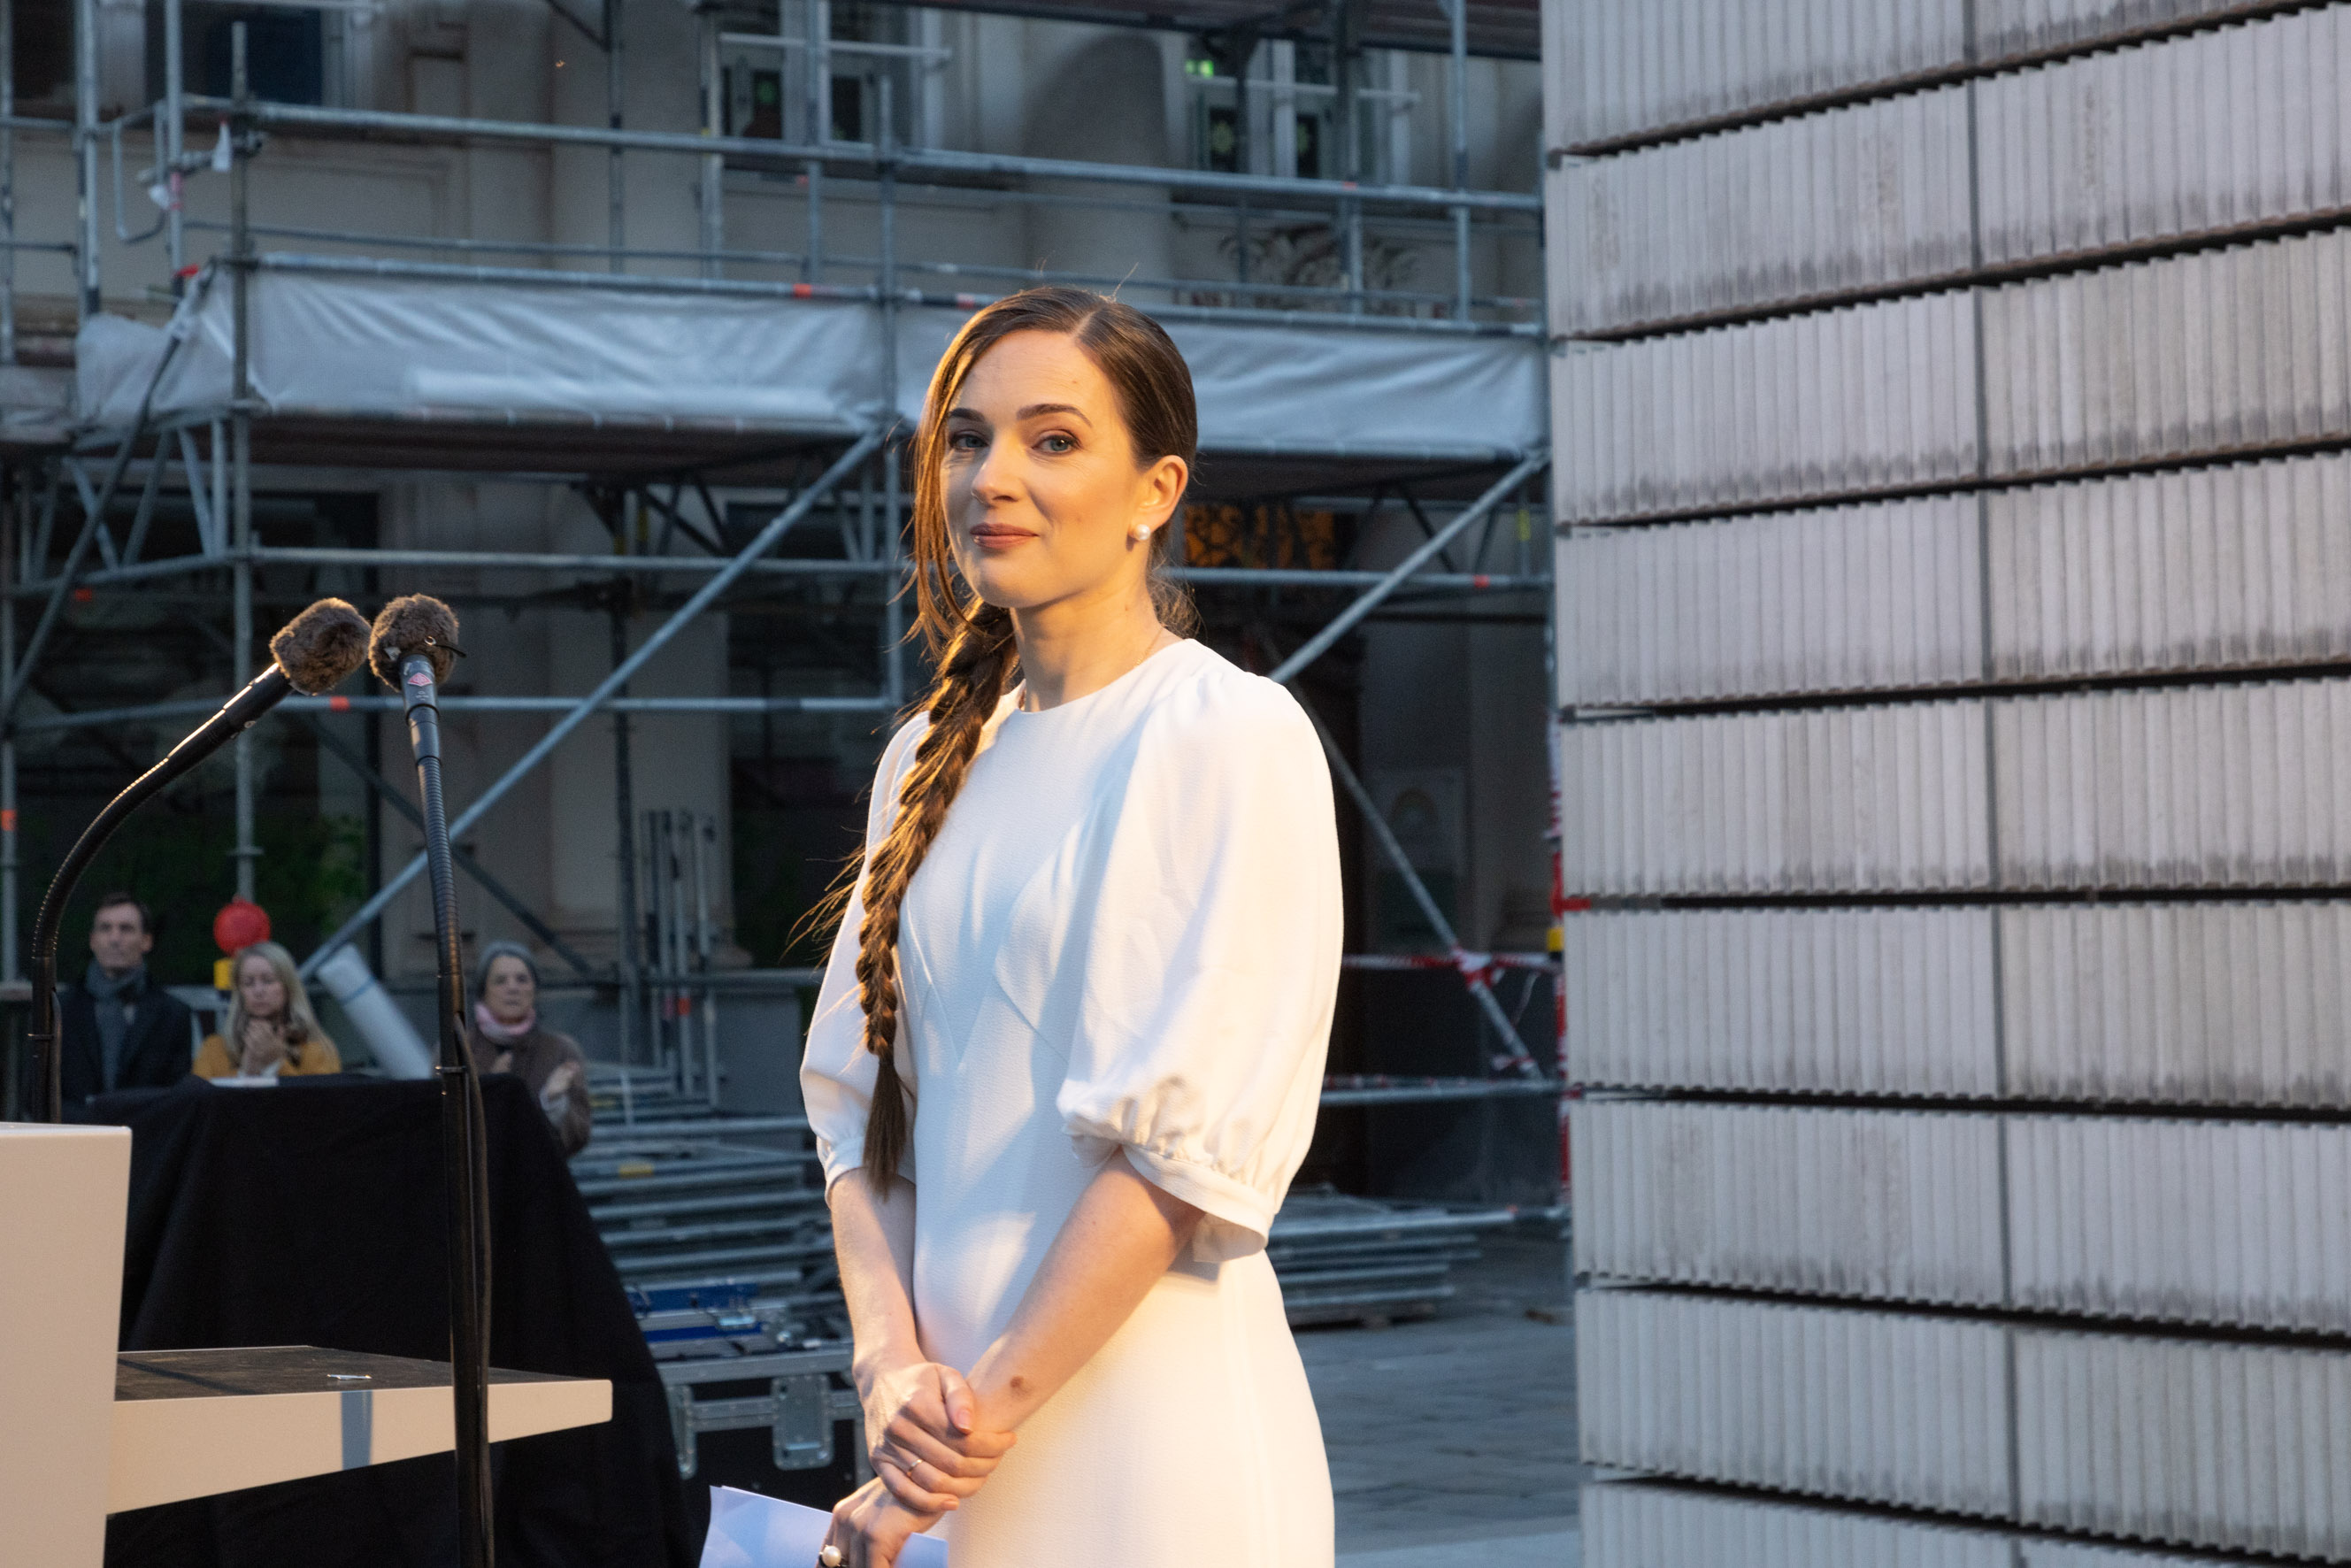 Oleksandra Matviichuk in a white dress looks into the camera